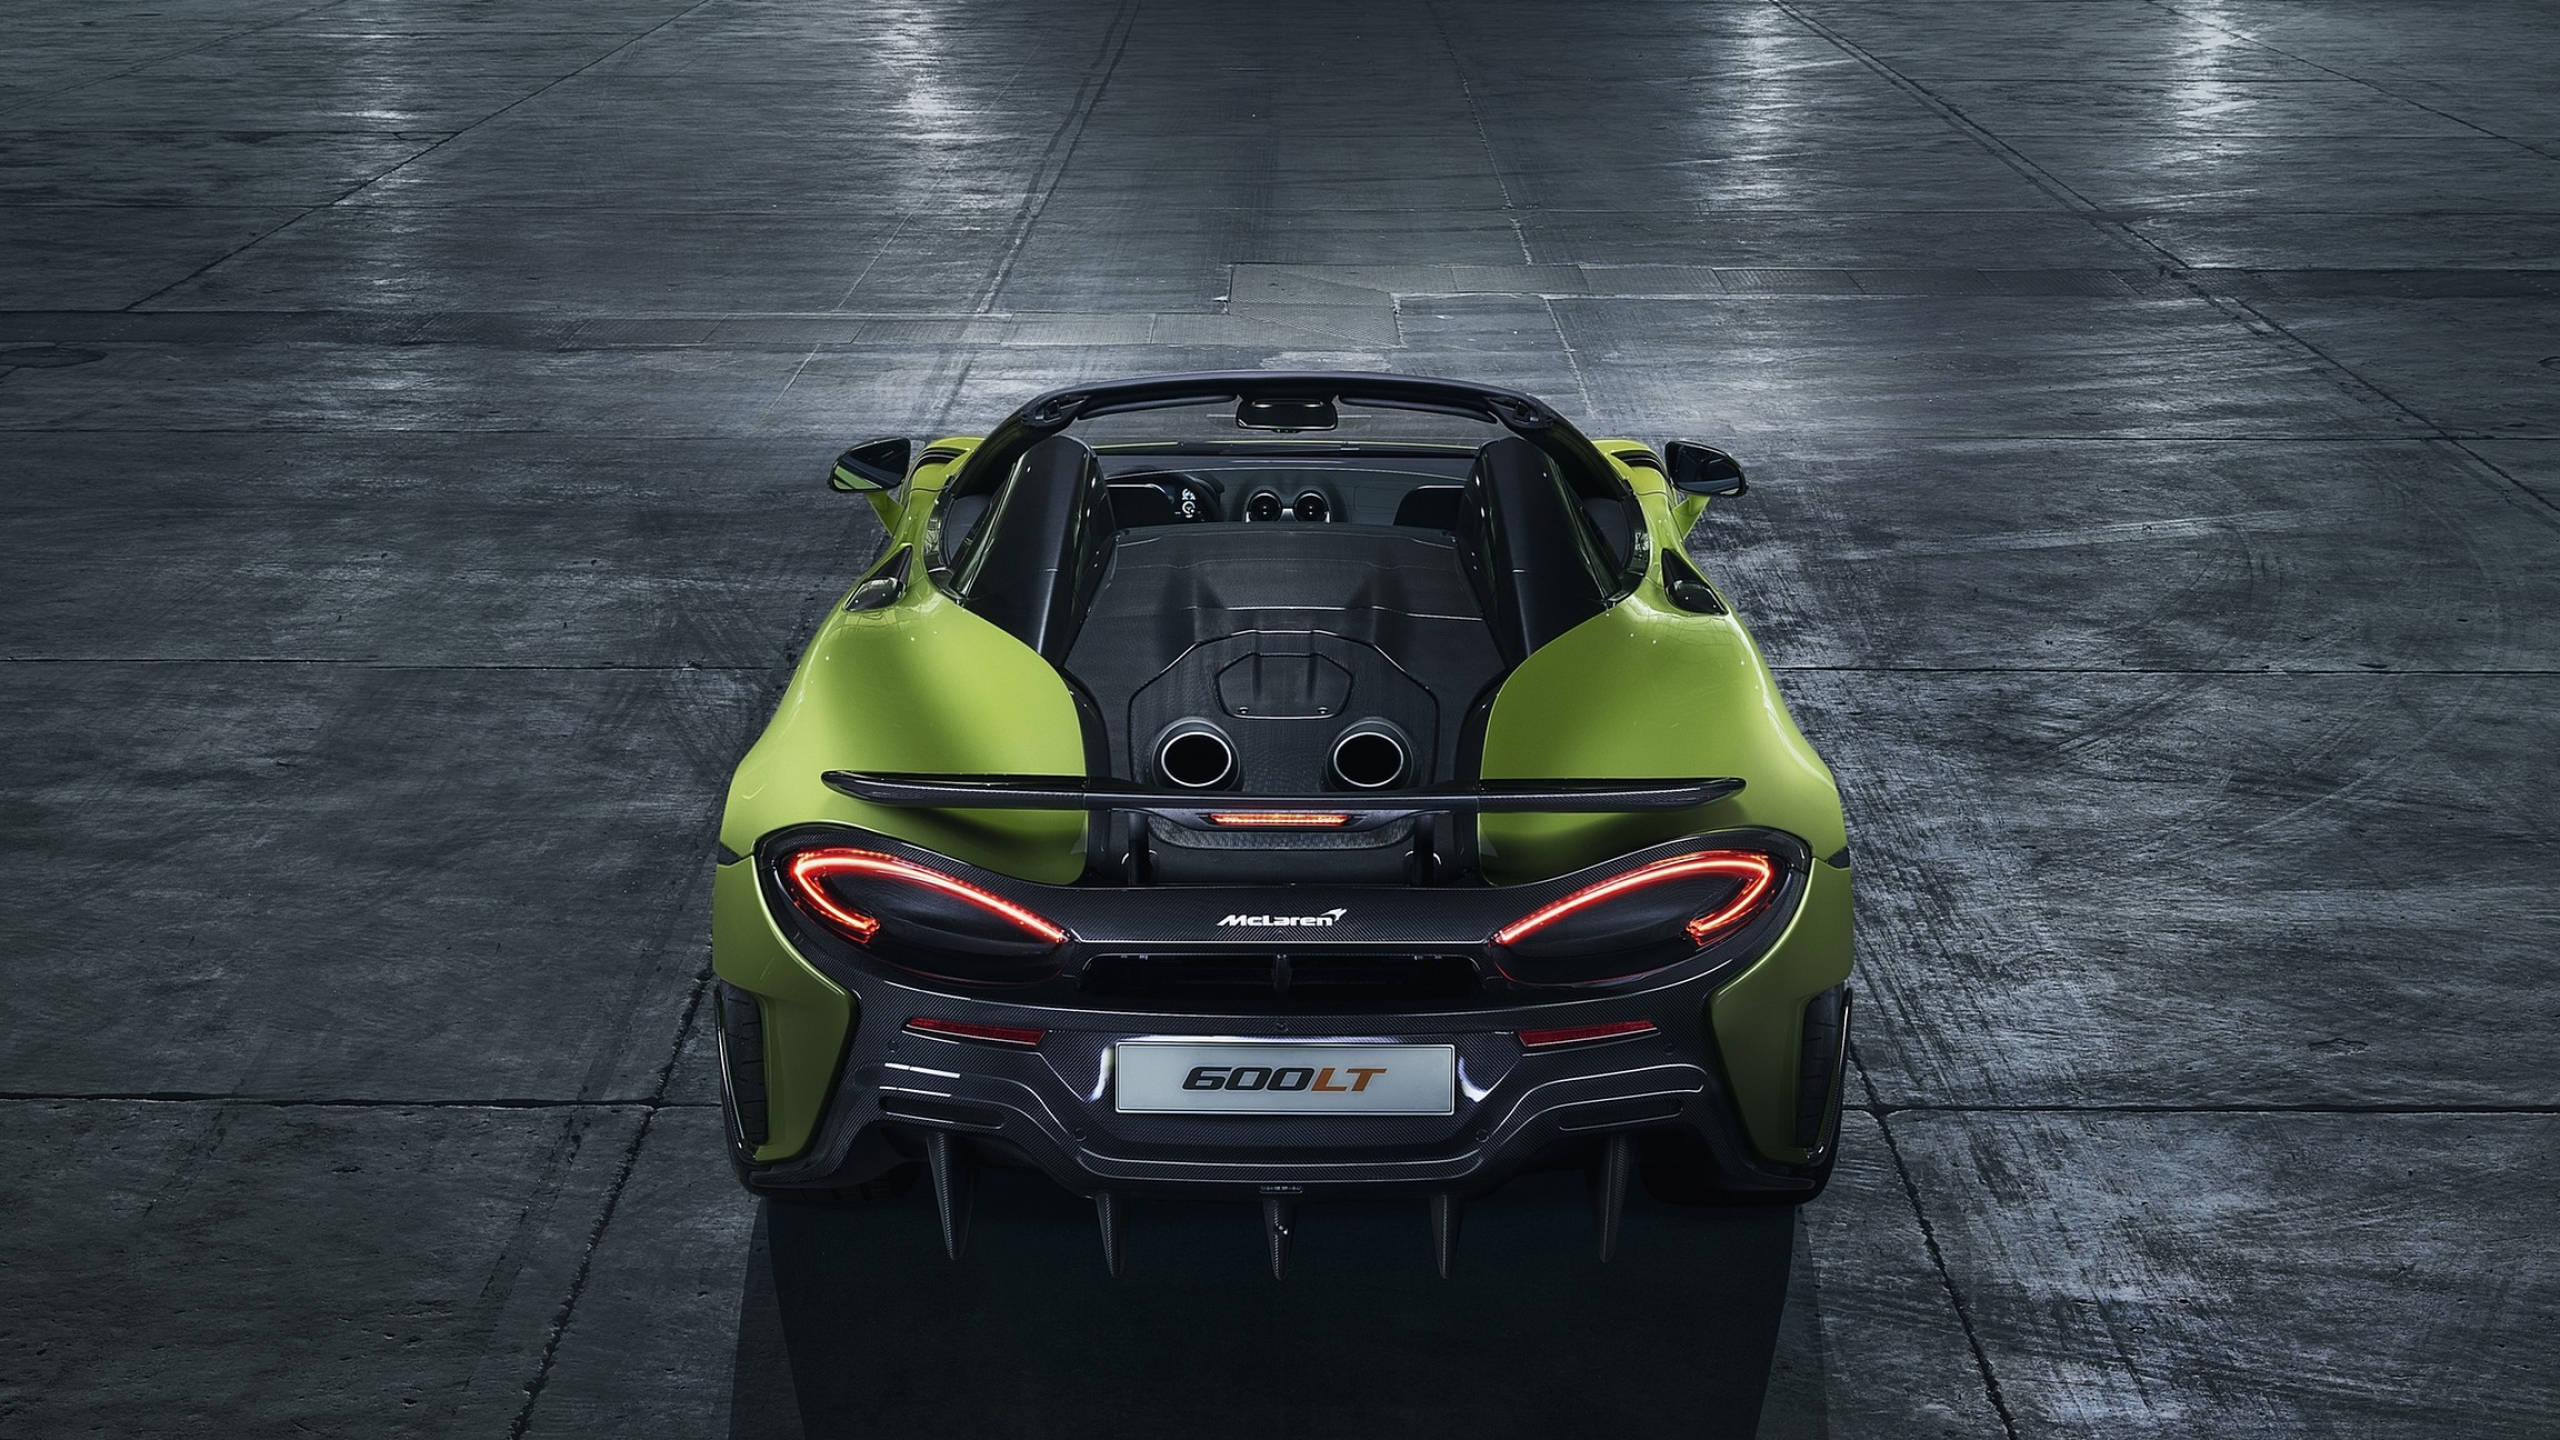 McLaren 600LT, 2020 release, Rear HD wallpaper, Exciting sports car, 2560x1440 HD Desktop